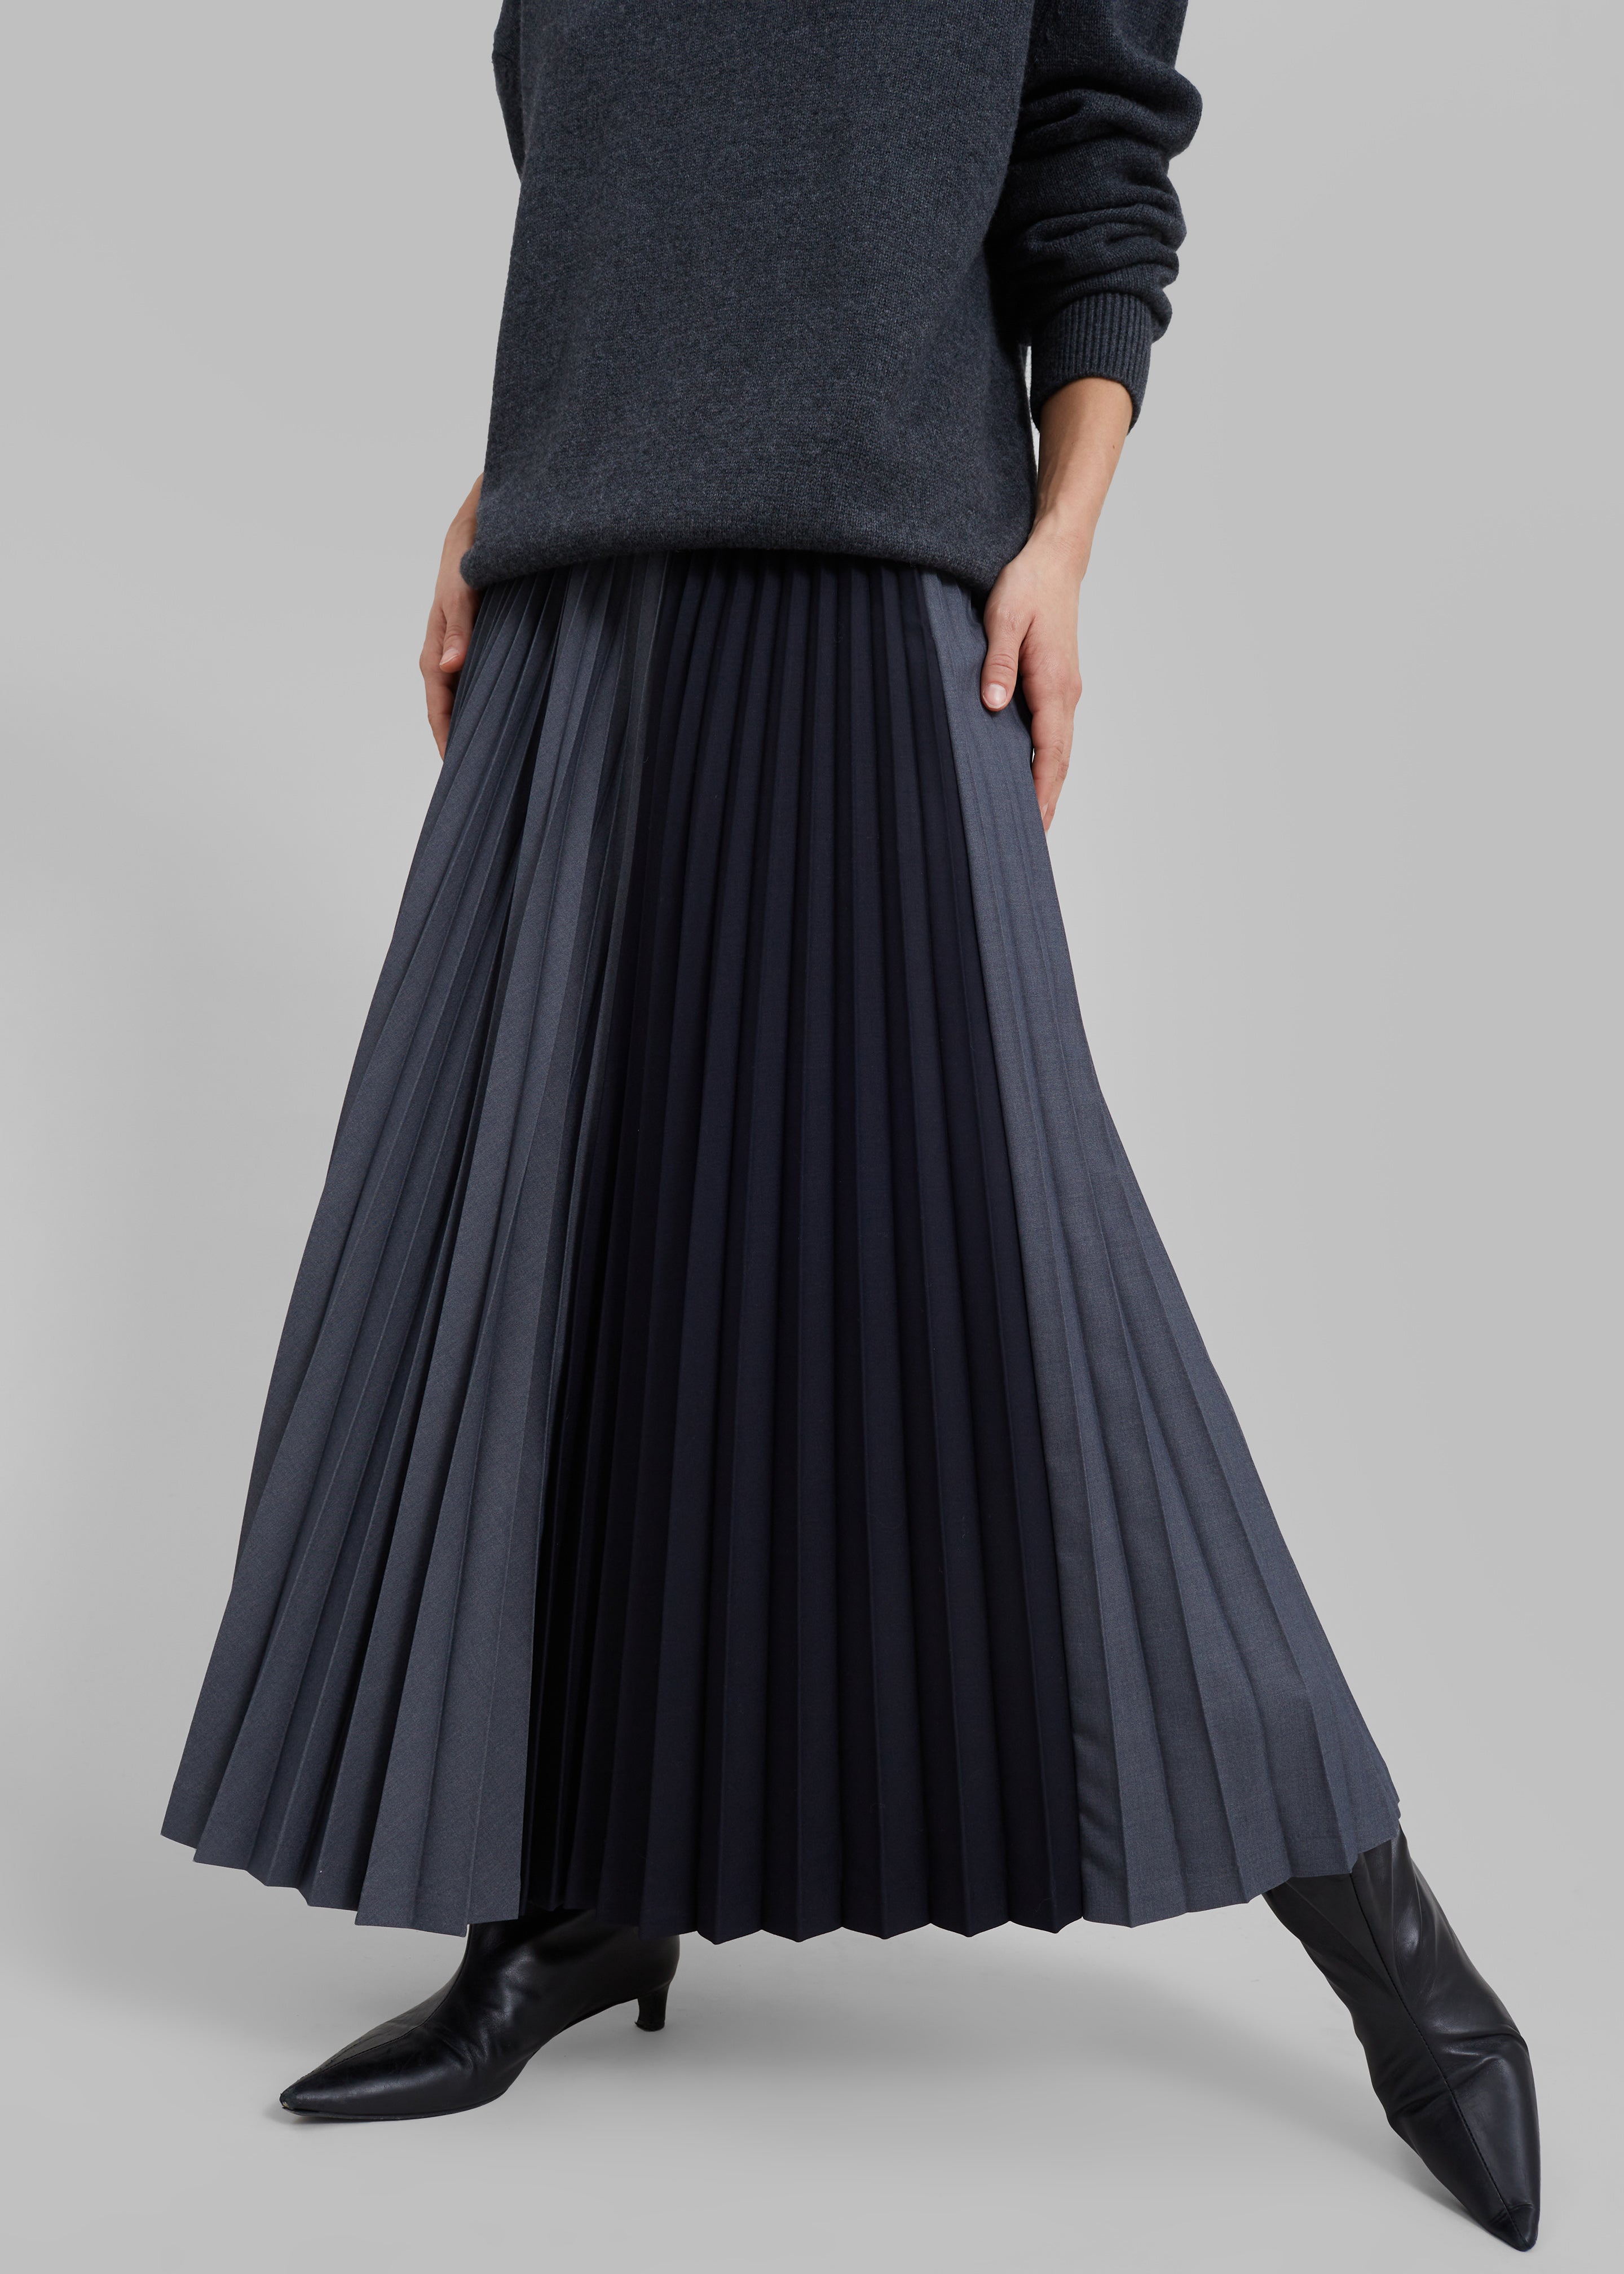 Orem Pleated Skirt - Charcoal - 2